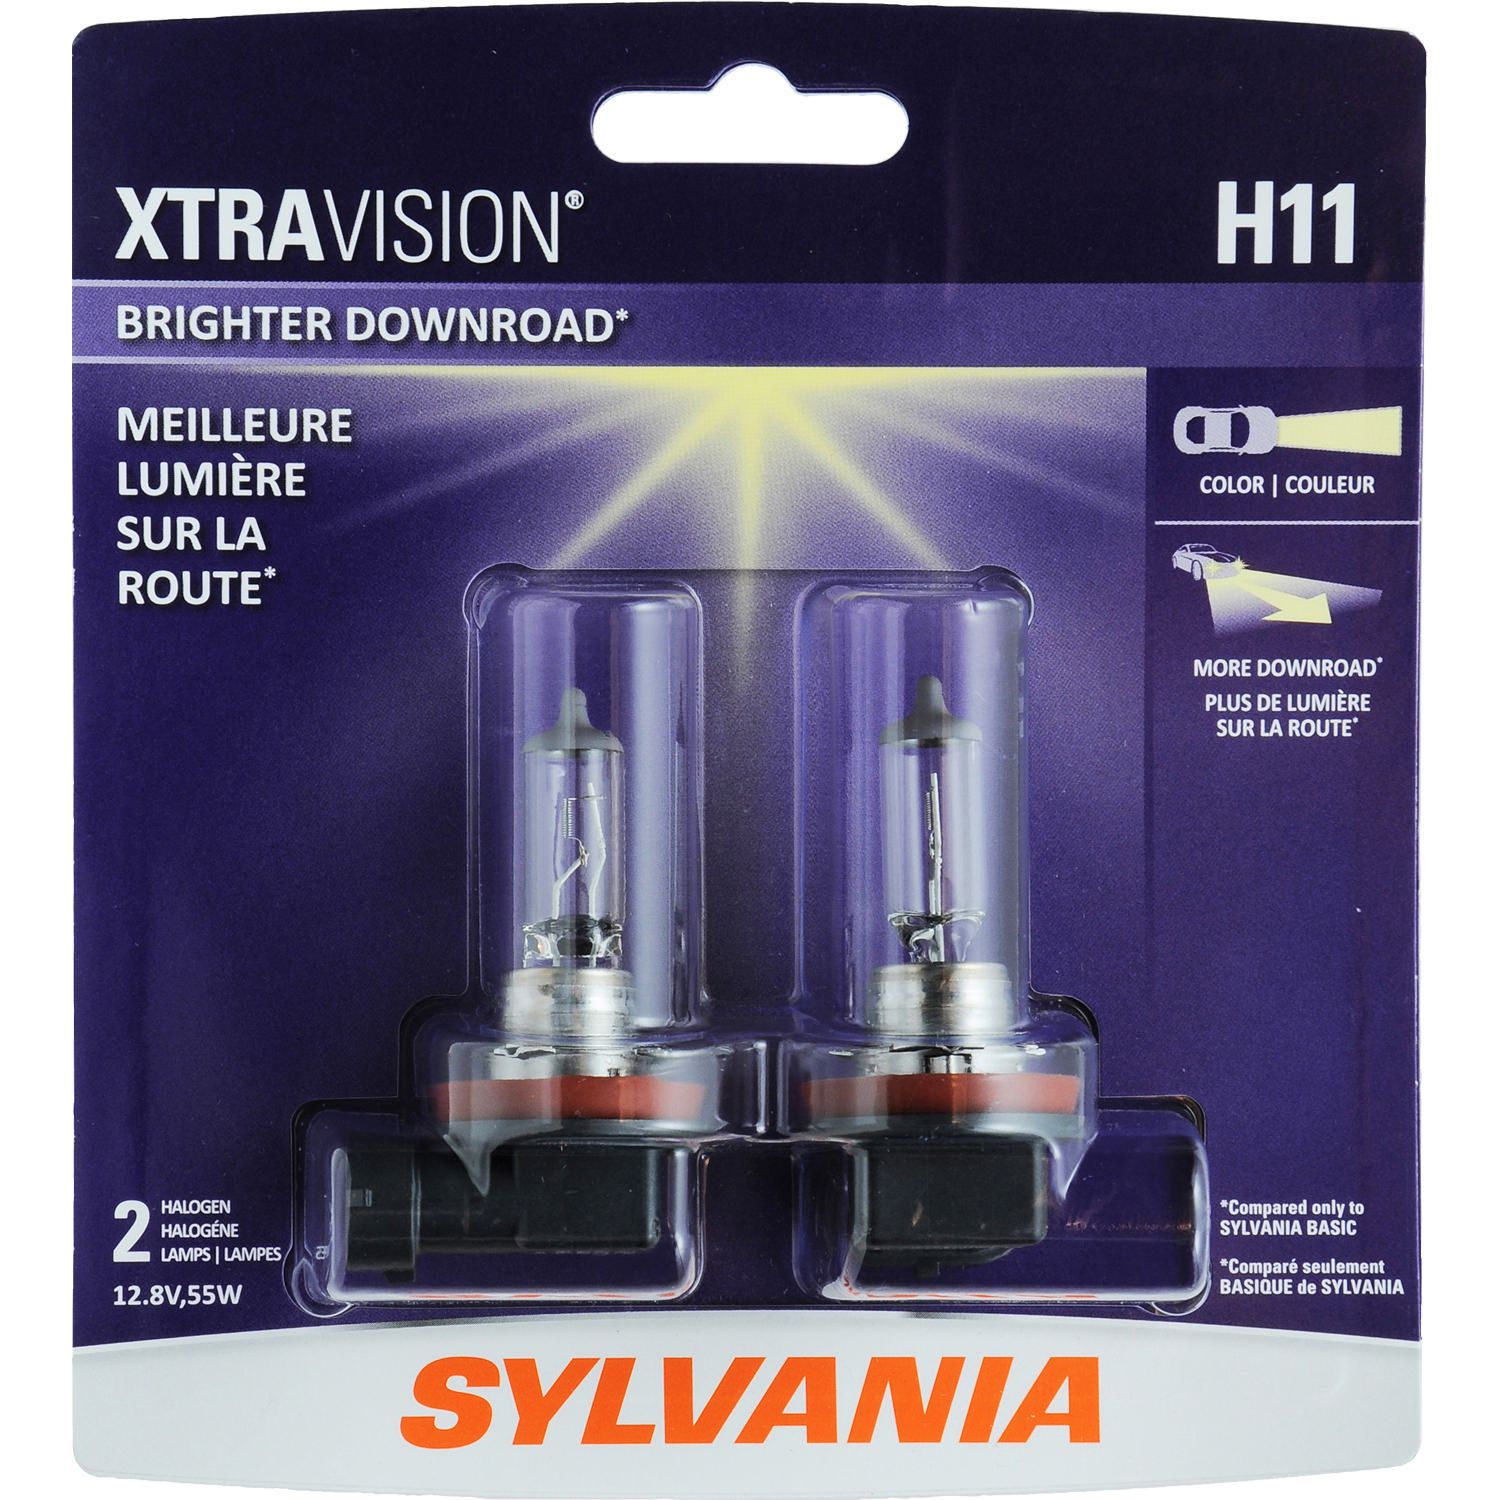 sylvania-h11-xtravision-halogen-headlights-walmart-canada